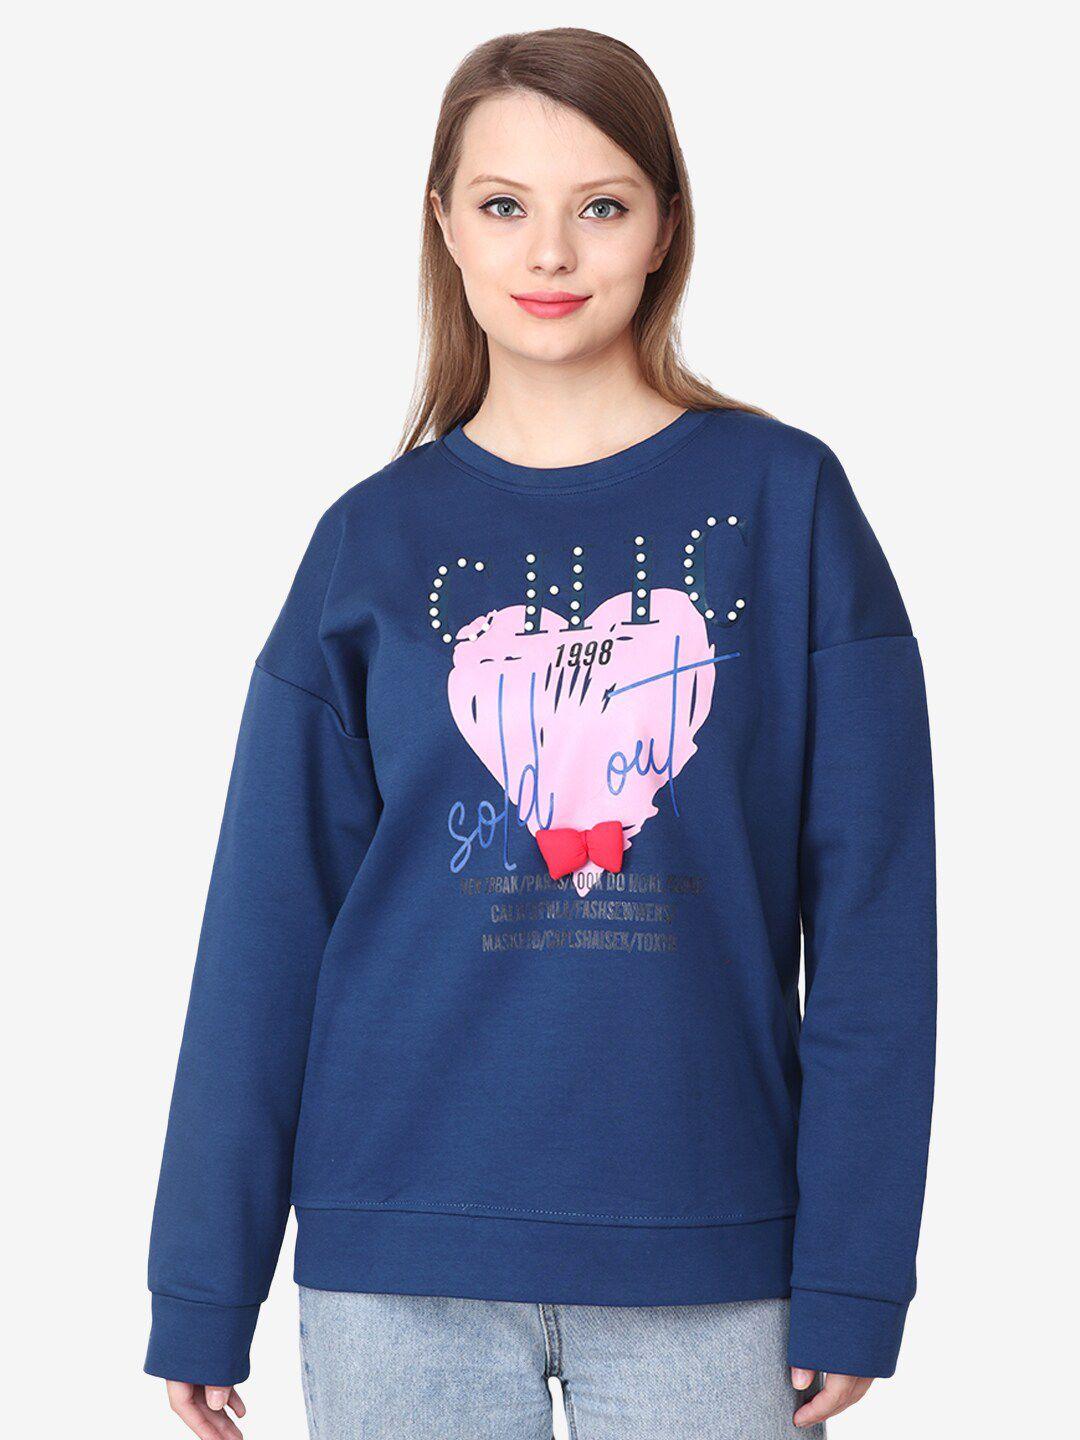 albion graphic printed pullover wool sweatshirt